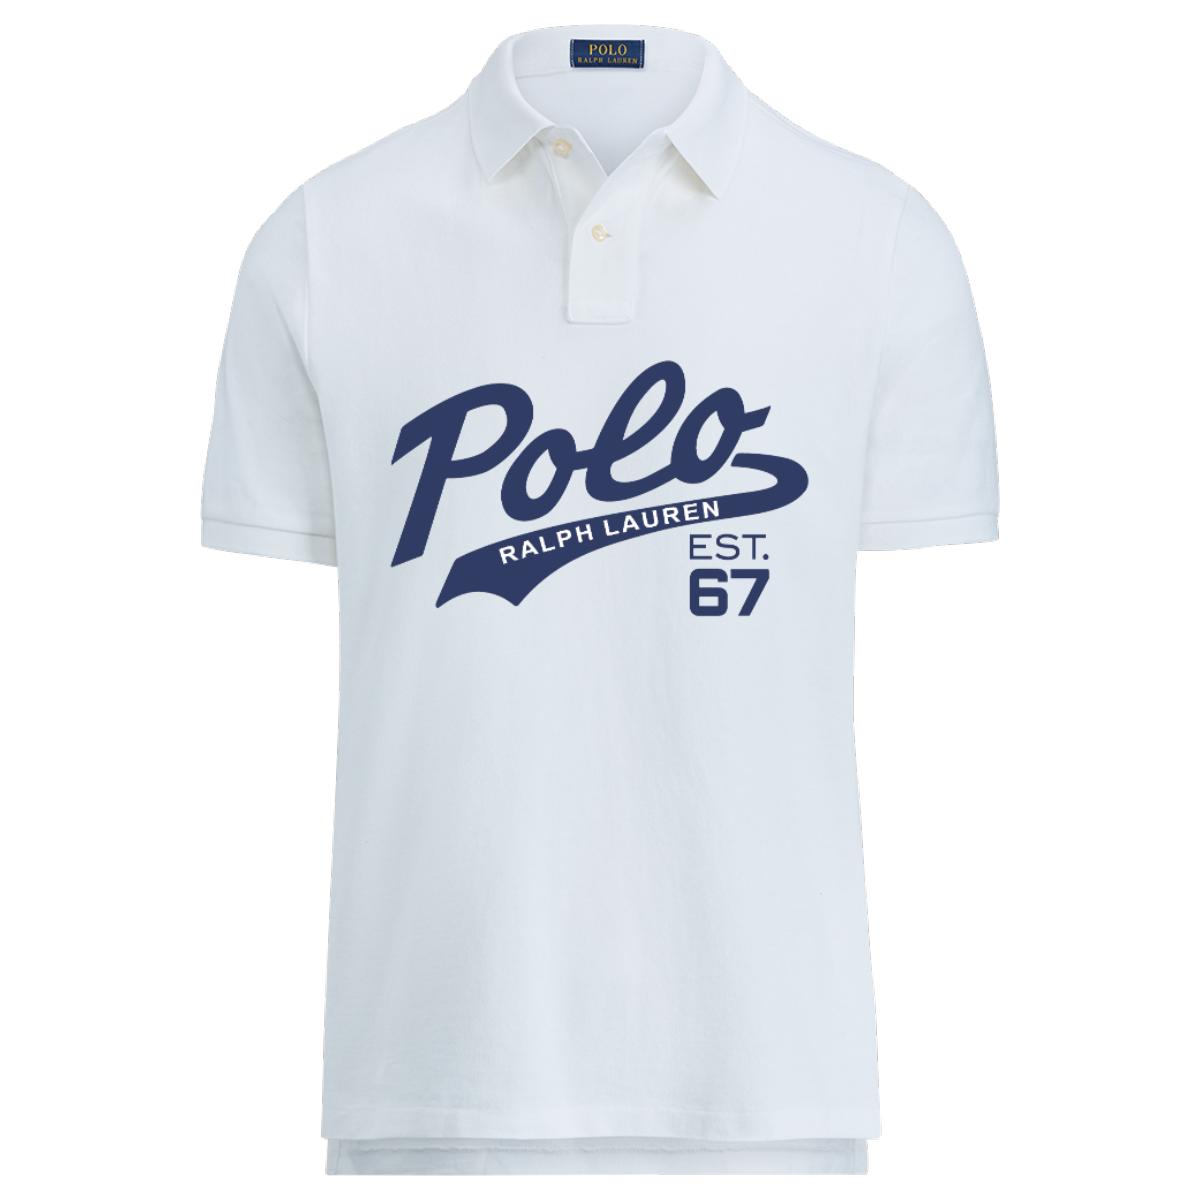 Create Your Own Men's Polo Shirt